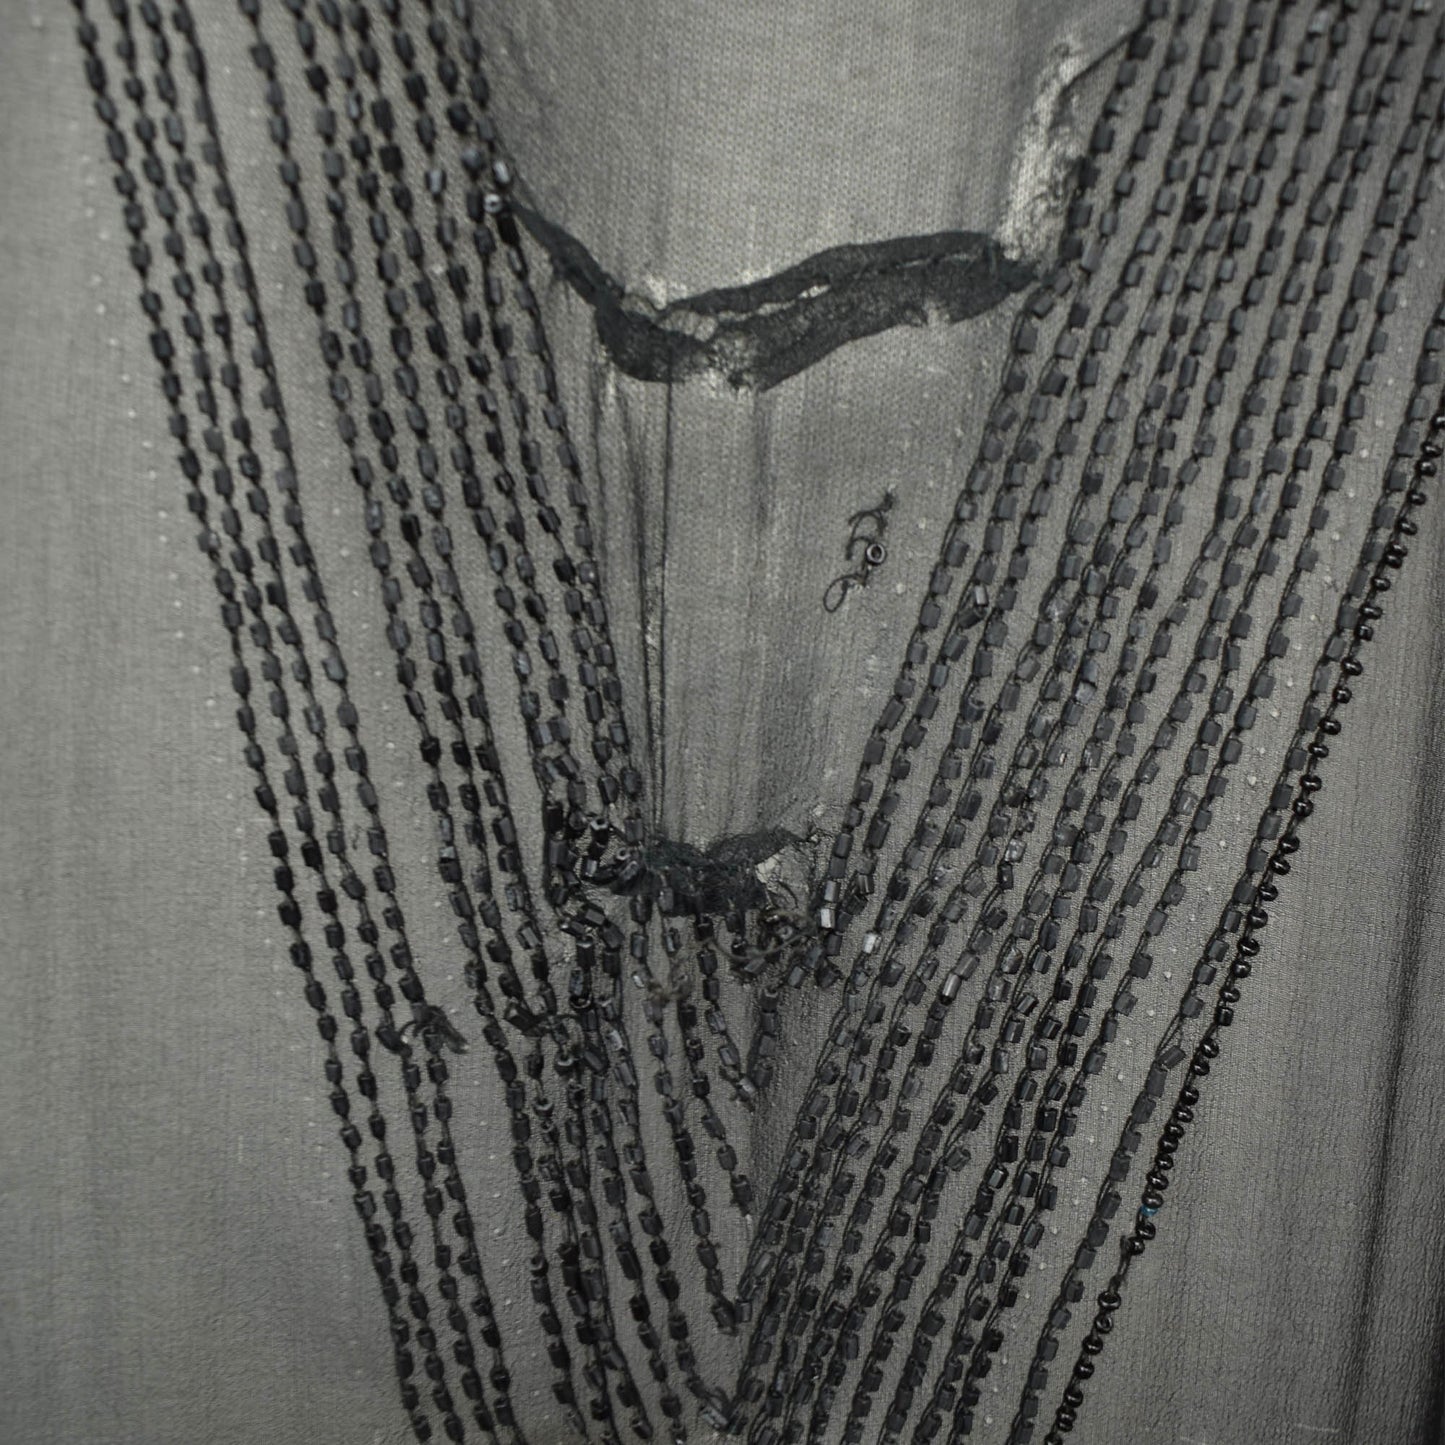 Incredible Vintage 1920s Flapper Dress - Beaded Black Silk - Holes Throughout